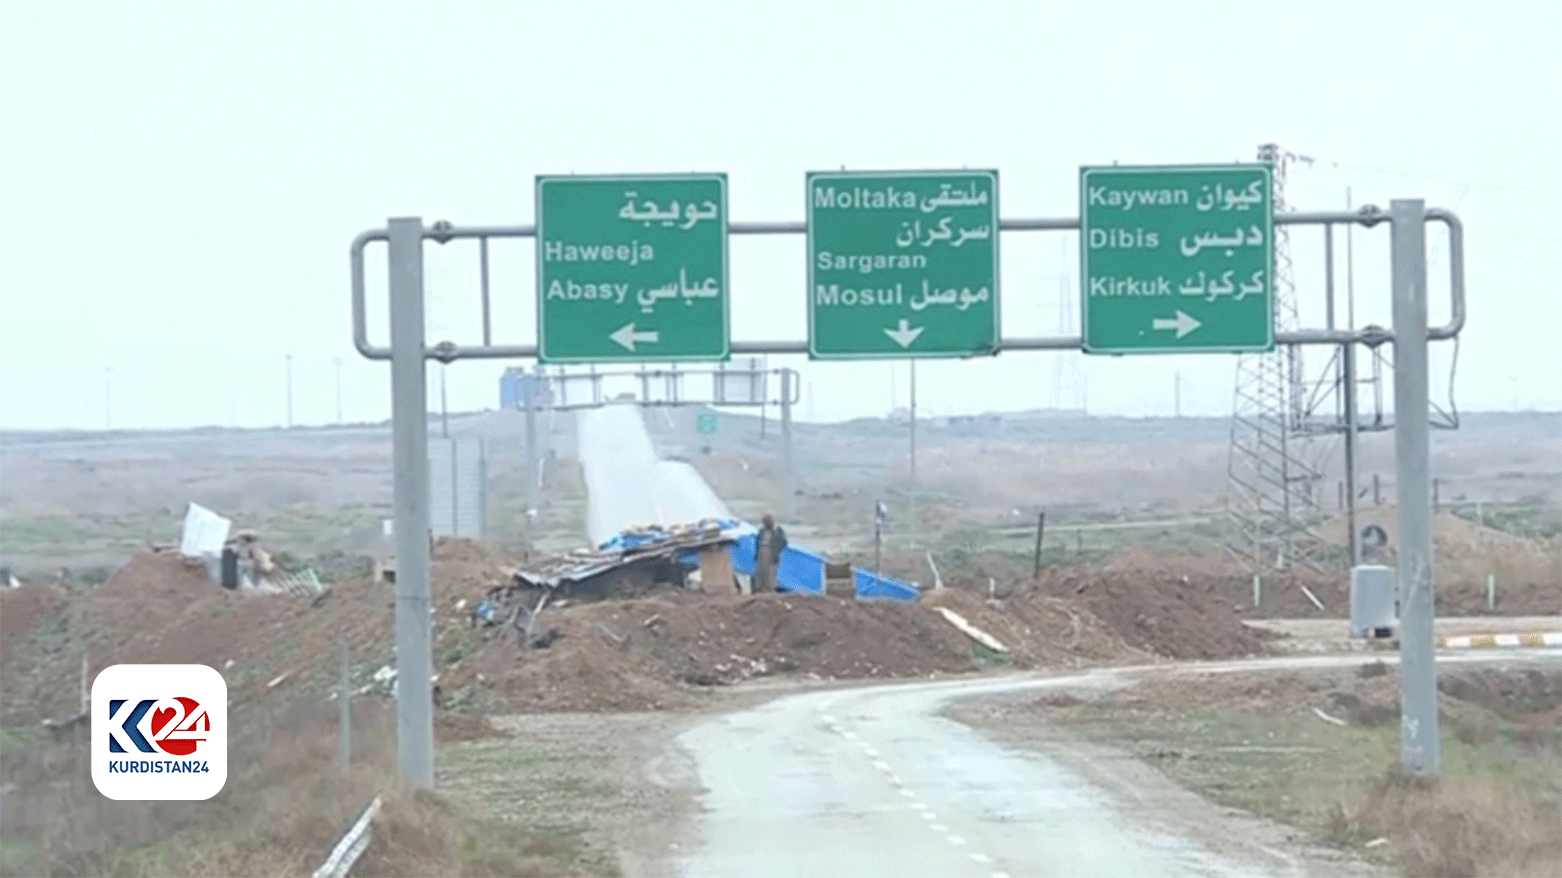 Street signs for the Sargaran sub-district in Kirkuk. (Photo: Kurdistan 24)